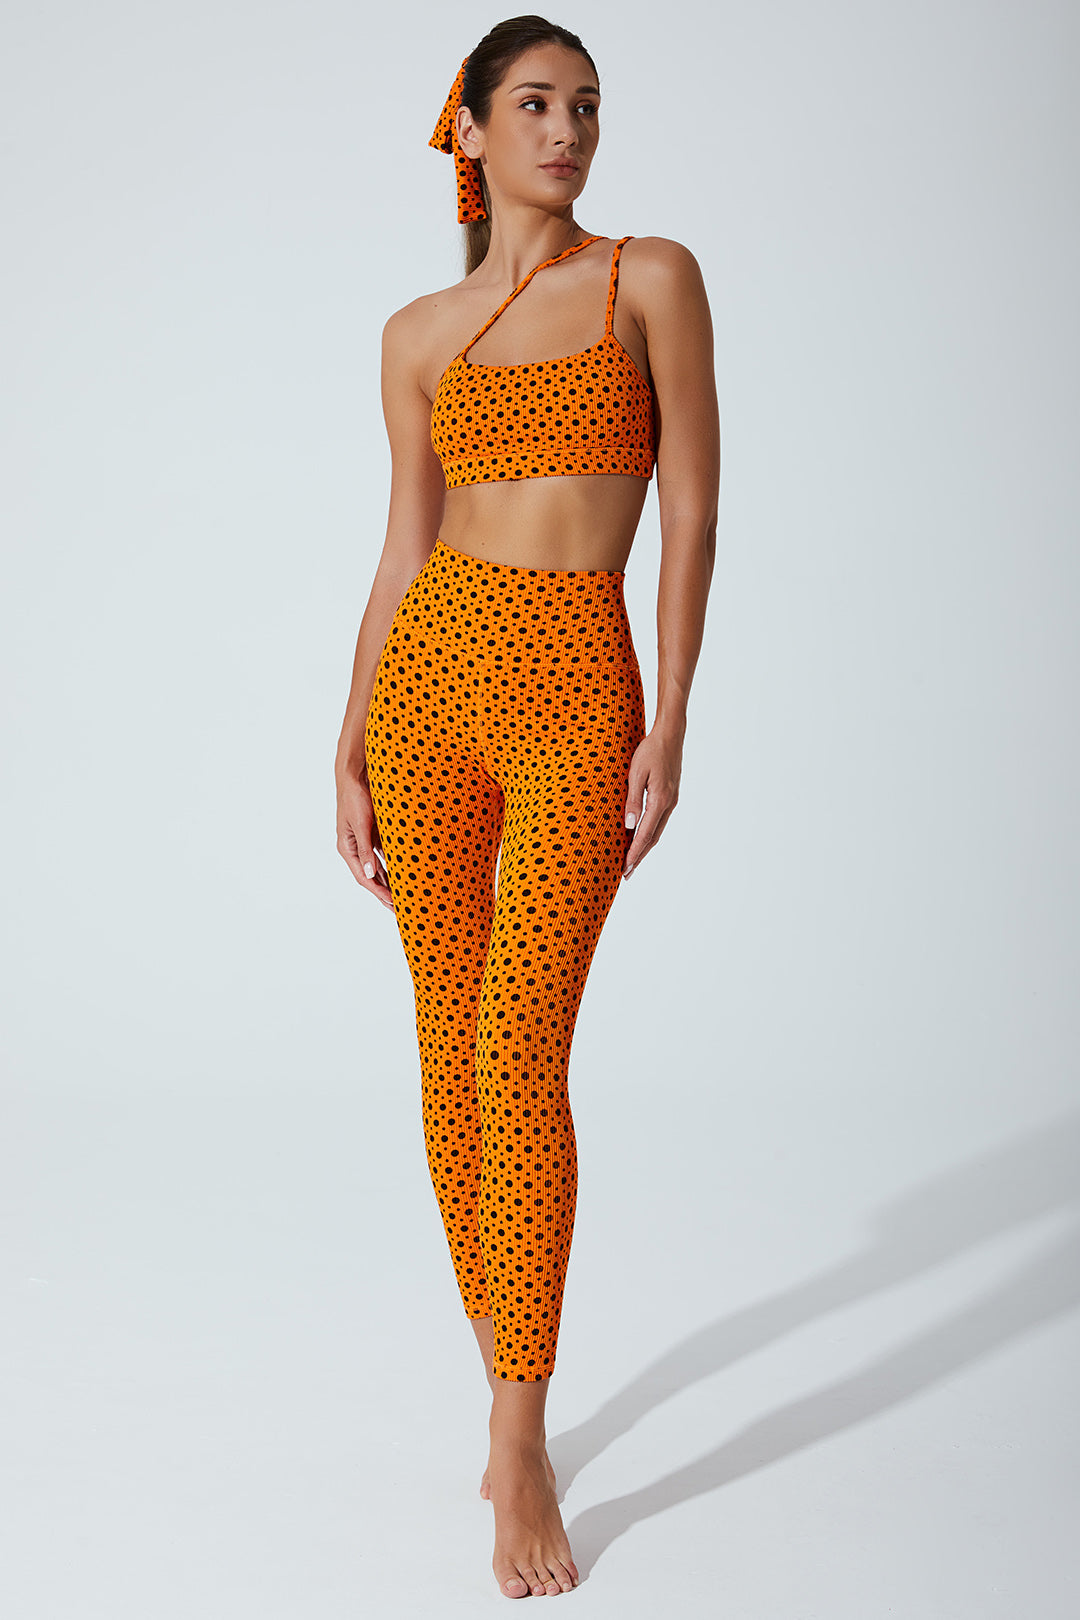 Vibrant orange polka dot leggings for women, featuring a playful beetle design - OW-0023-WLG-OR.